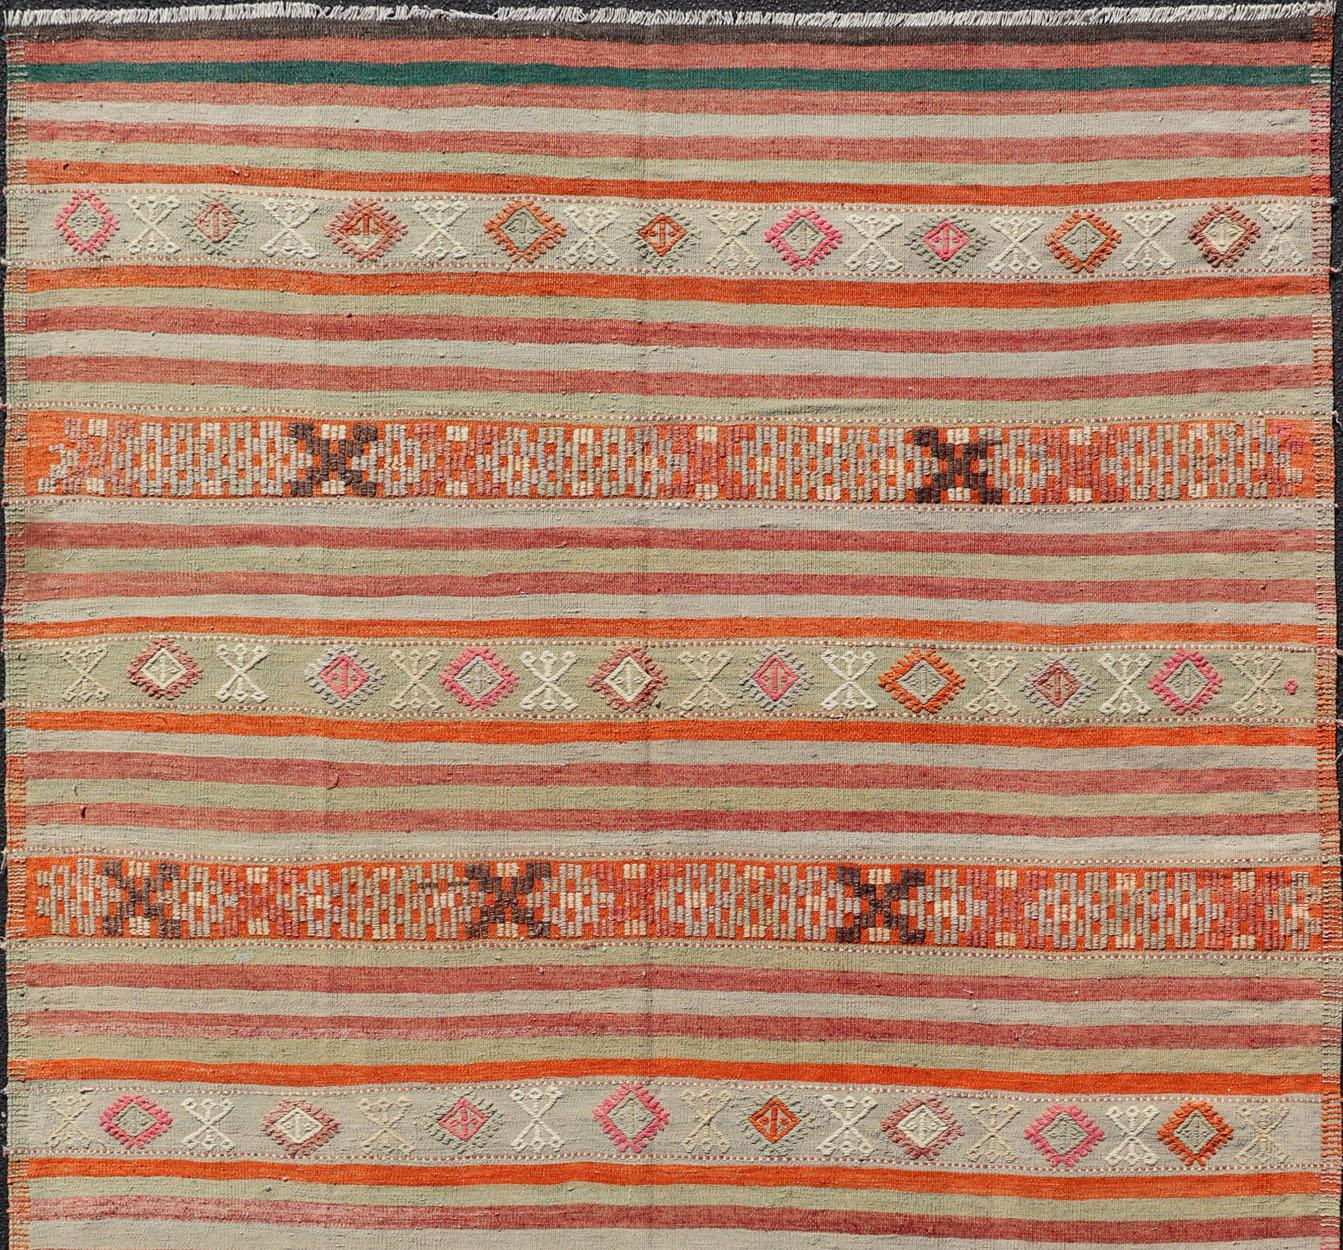 Vintage Turkish large Kilim rug with geometric shapes and colorful stripes, rug TU-NED-1030, country of origin / type: turkey / Kilim, circa mid-20th century

Measures:6'8 x 11'4.